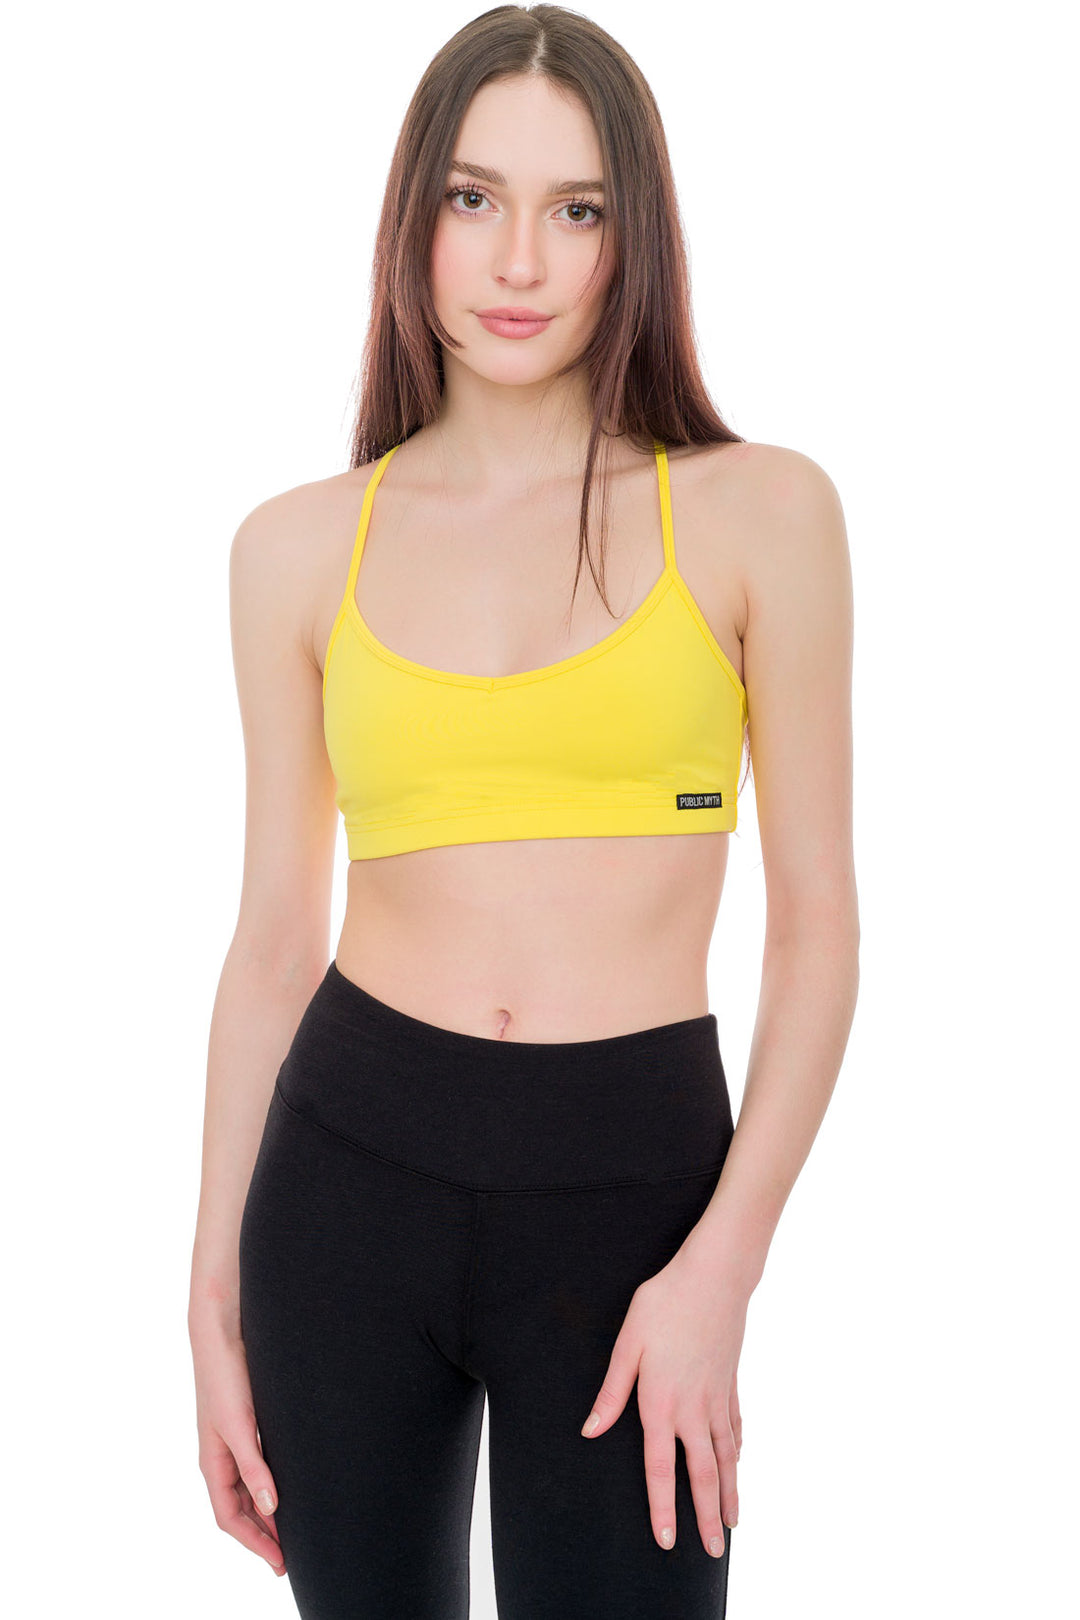 Hazel Tech-Sports Bra Comfort Bra Underwear Wirefree Padded Yoga